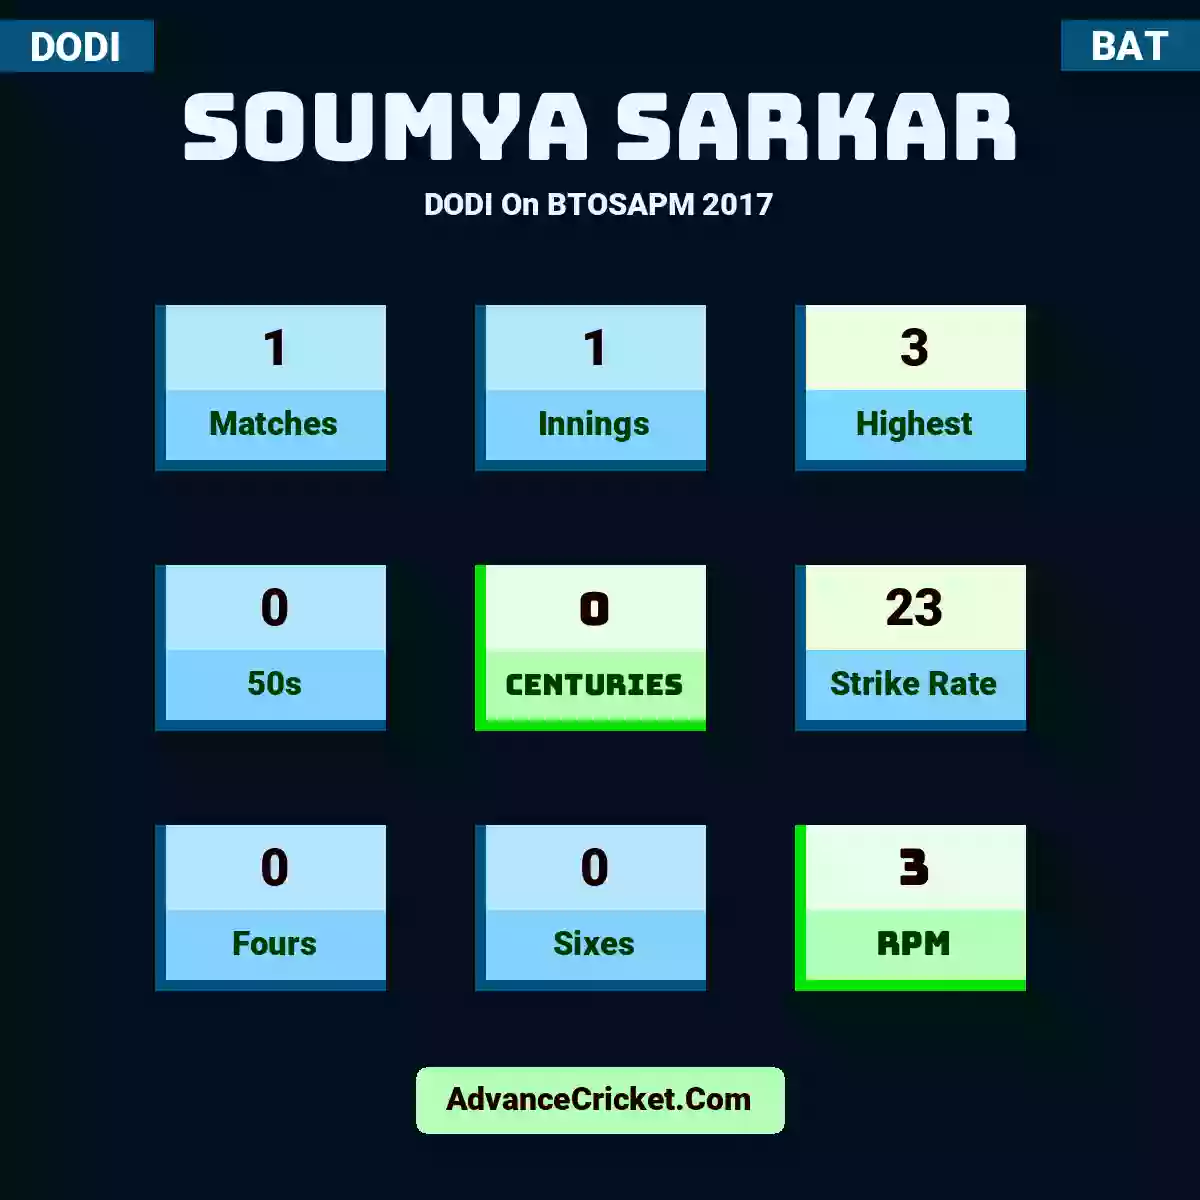 Soumya Sarkar DODI  On BTOSAPM 2017, Soumya Sarkar played 1 matches, scored 3 runs as highest, 0 half-centuries, and 0 centuries, with a strike rate of 23. S.Sarkar hit 0 fours and 0 sixes, with an RPM of 3.